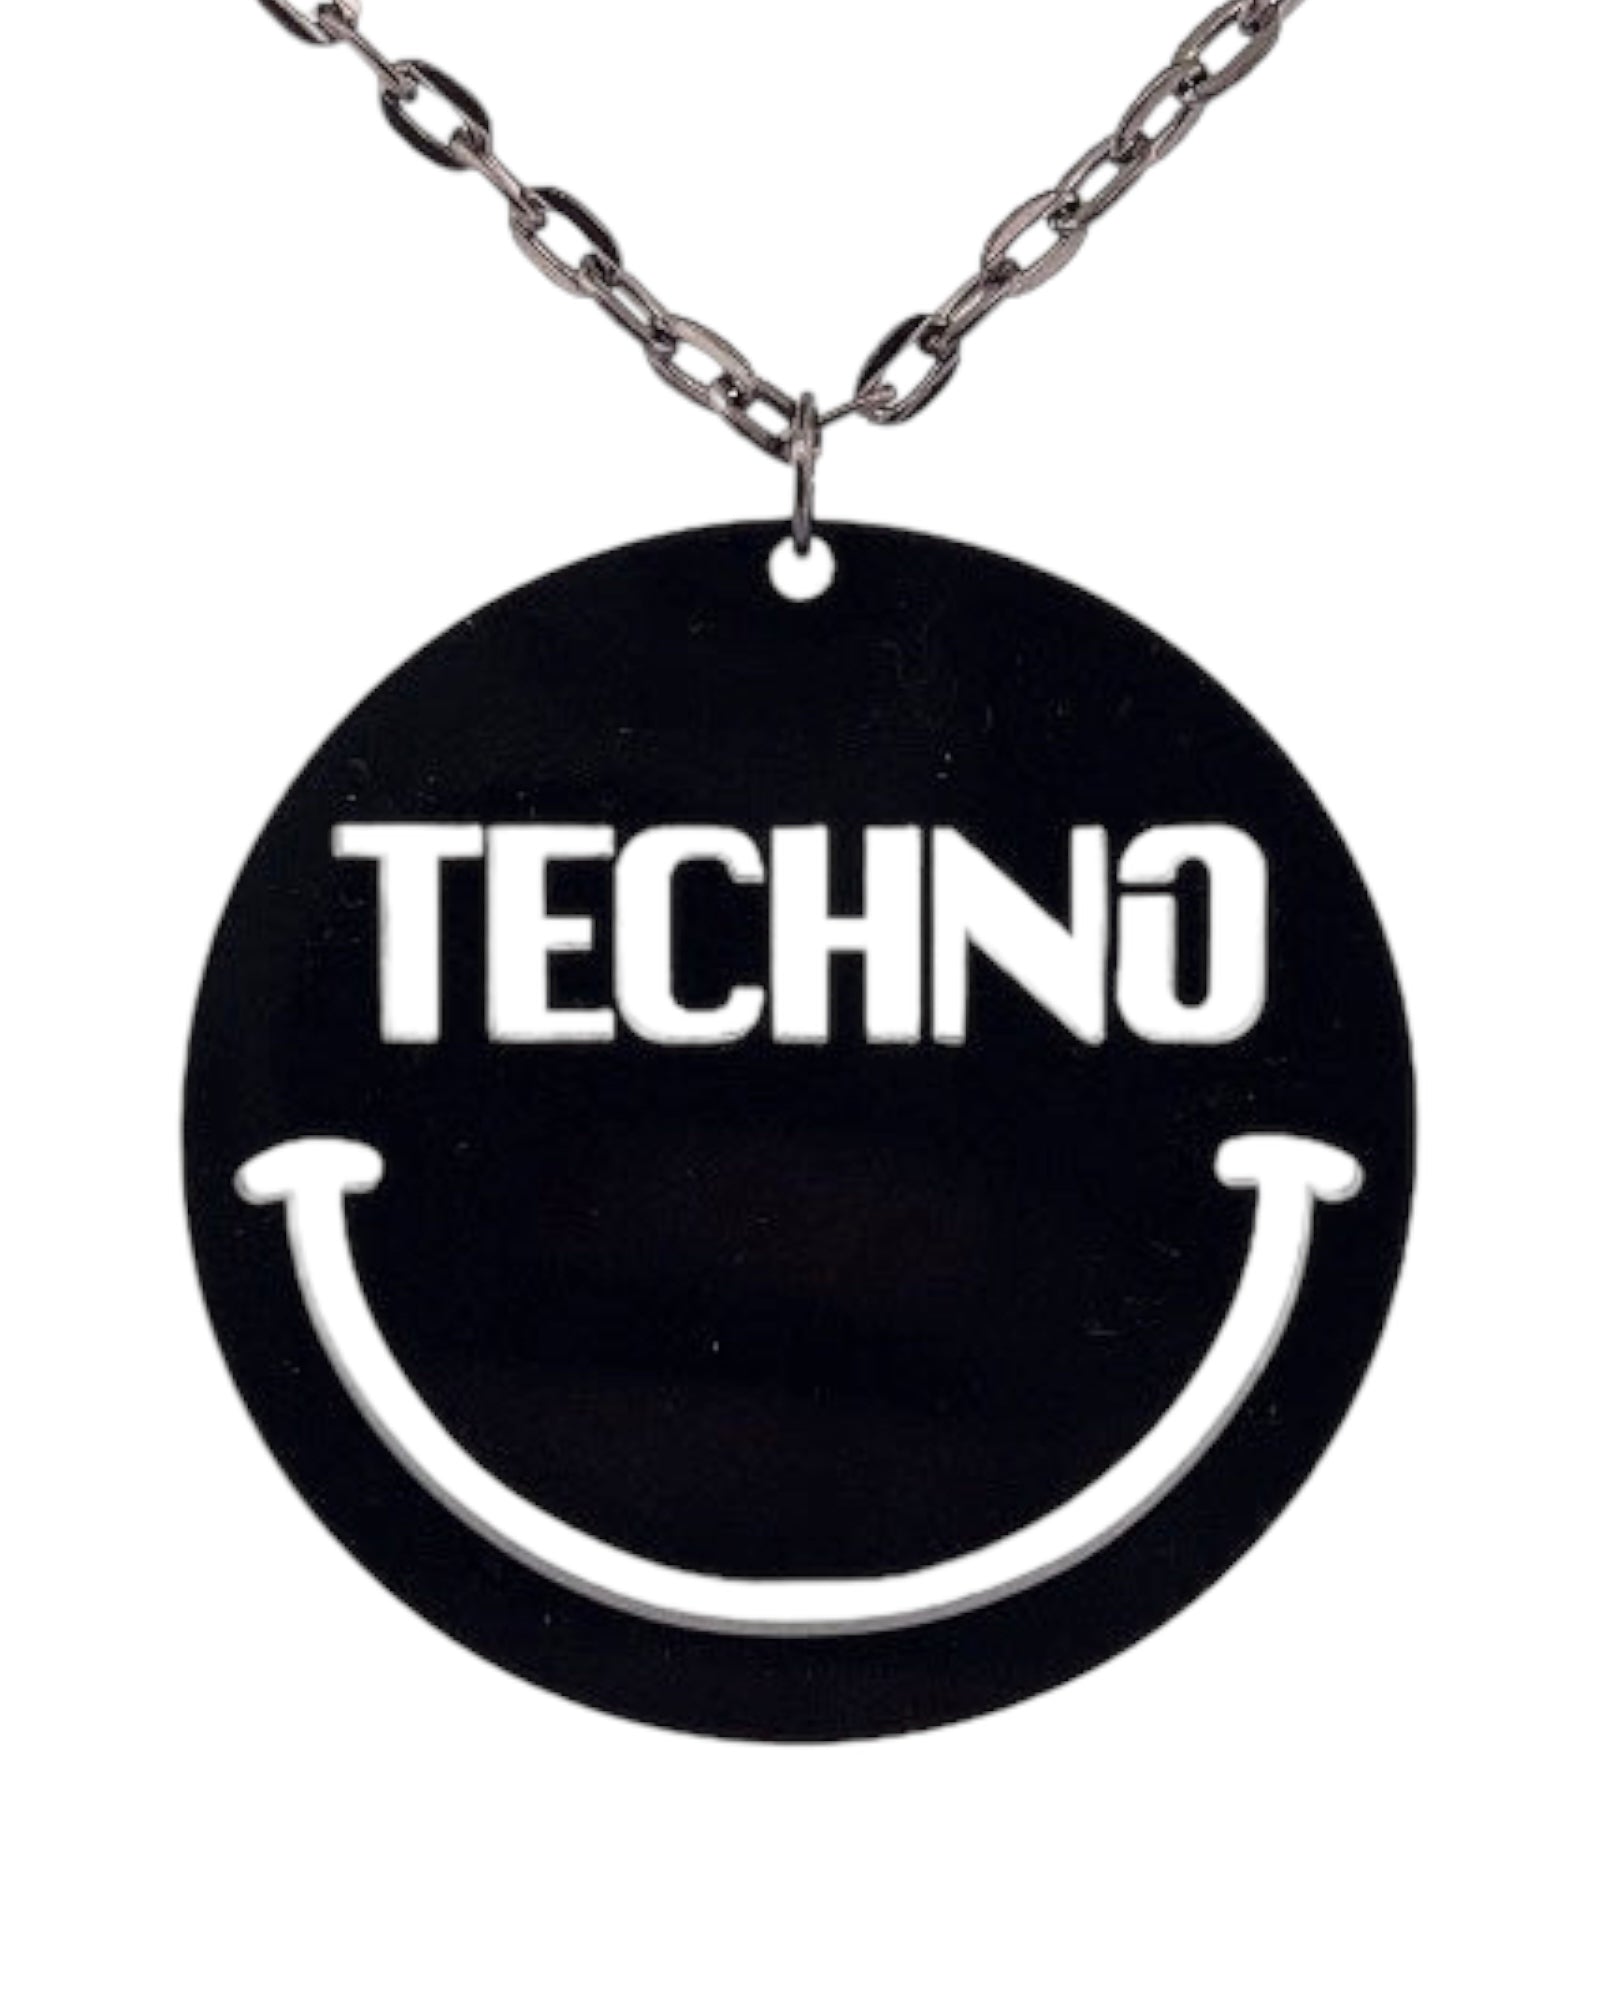 Techno Head Choker Necklace